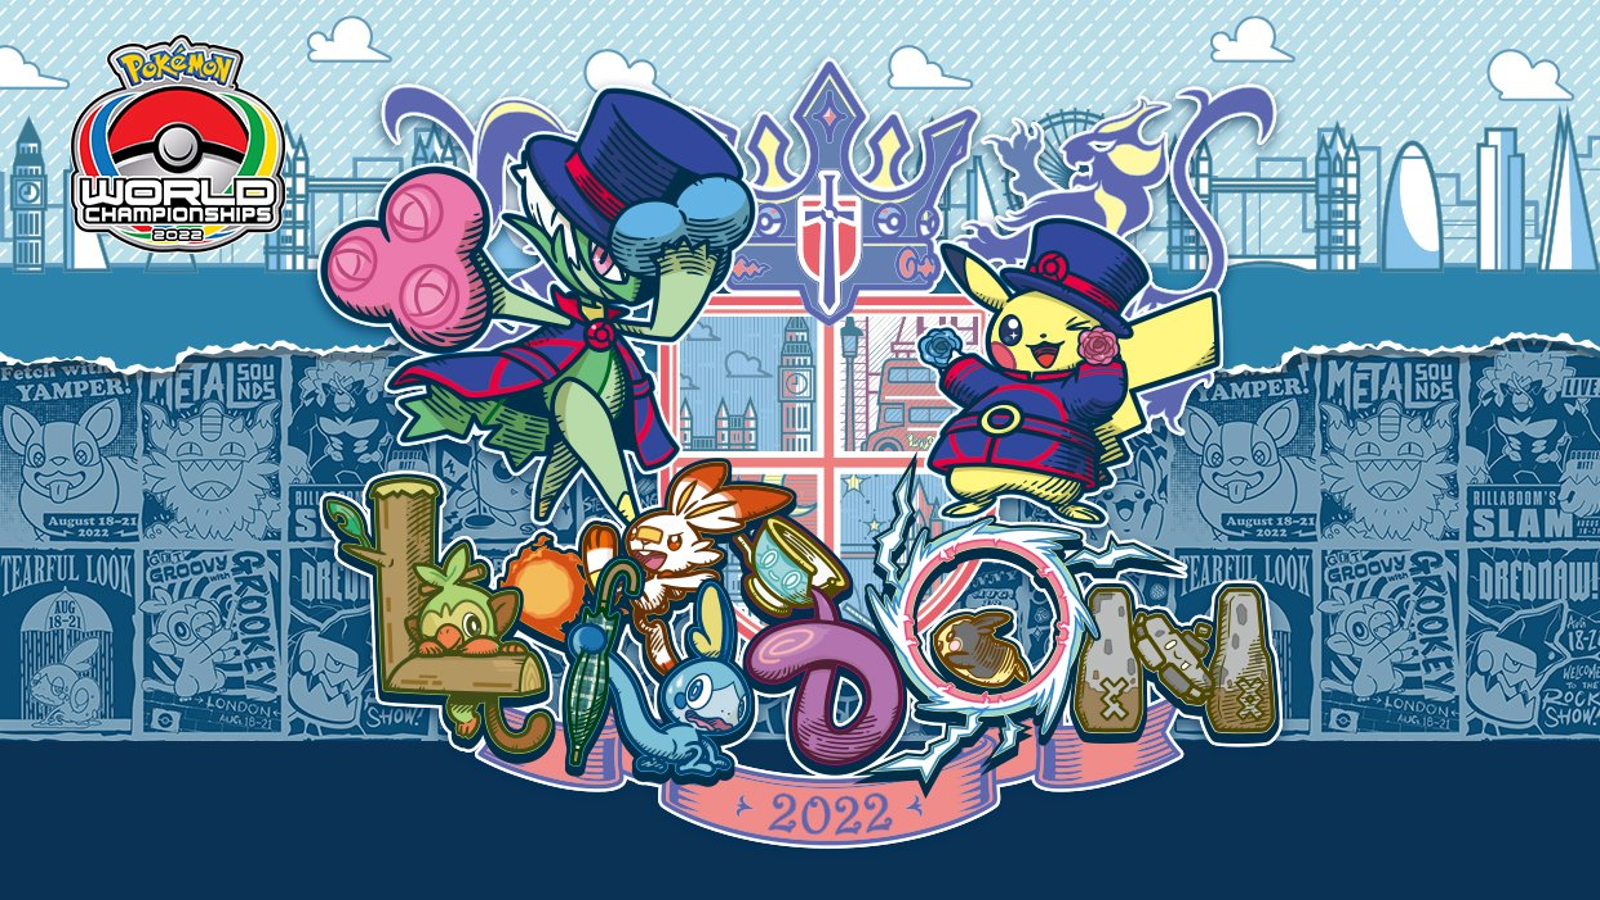 100+] Pokemon World Championships Wallpapers